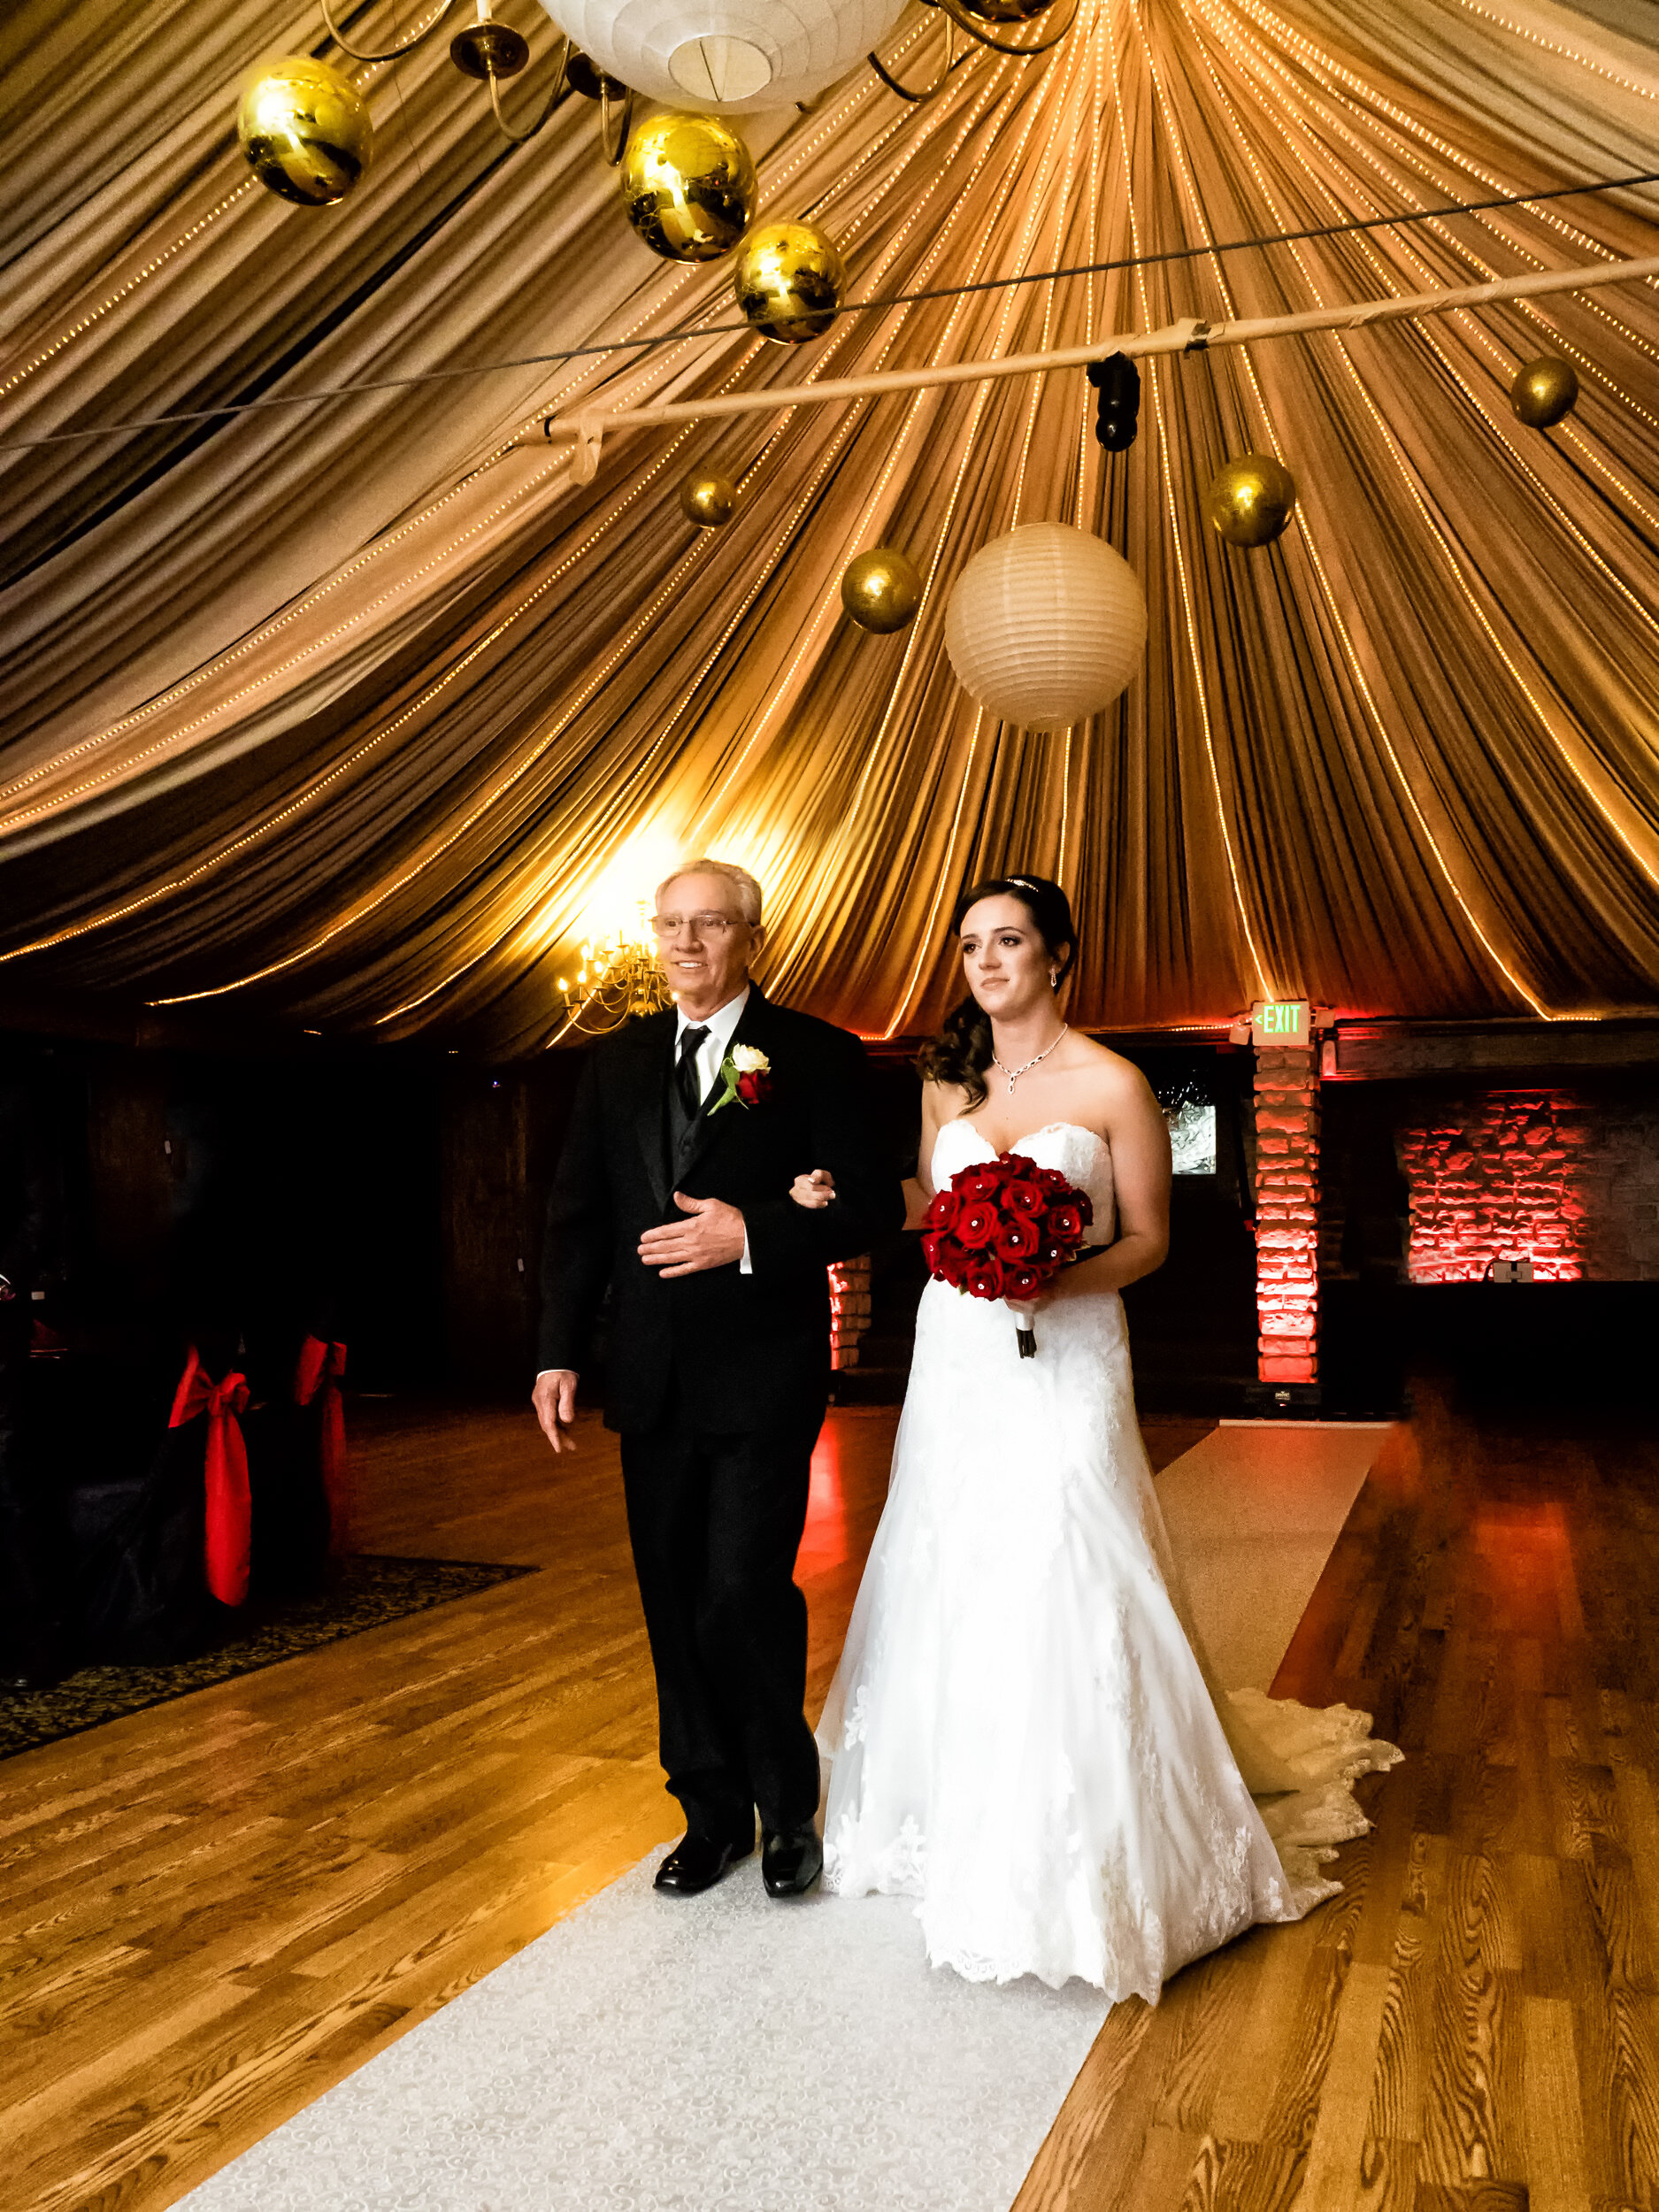 Meyer's Castle Wedding Venue - Chicago &amp; Northwest Indiana Wedding Photographer Region Weddings